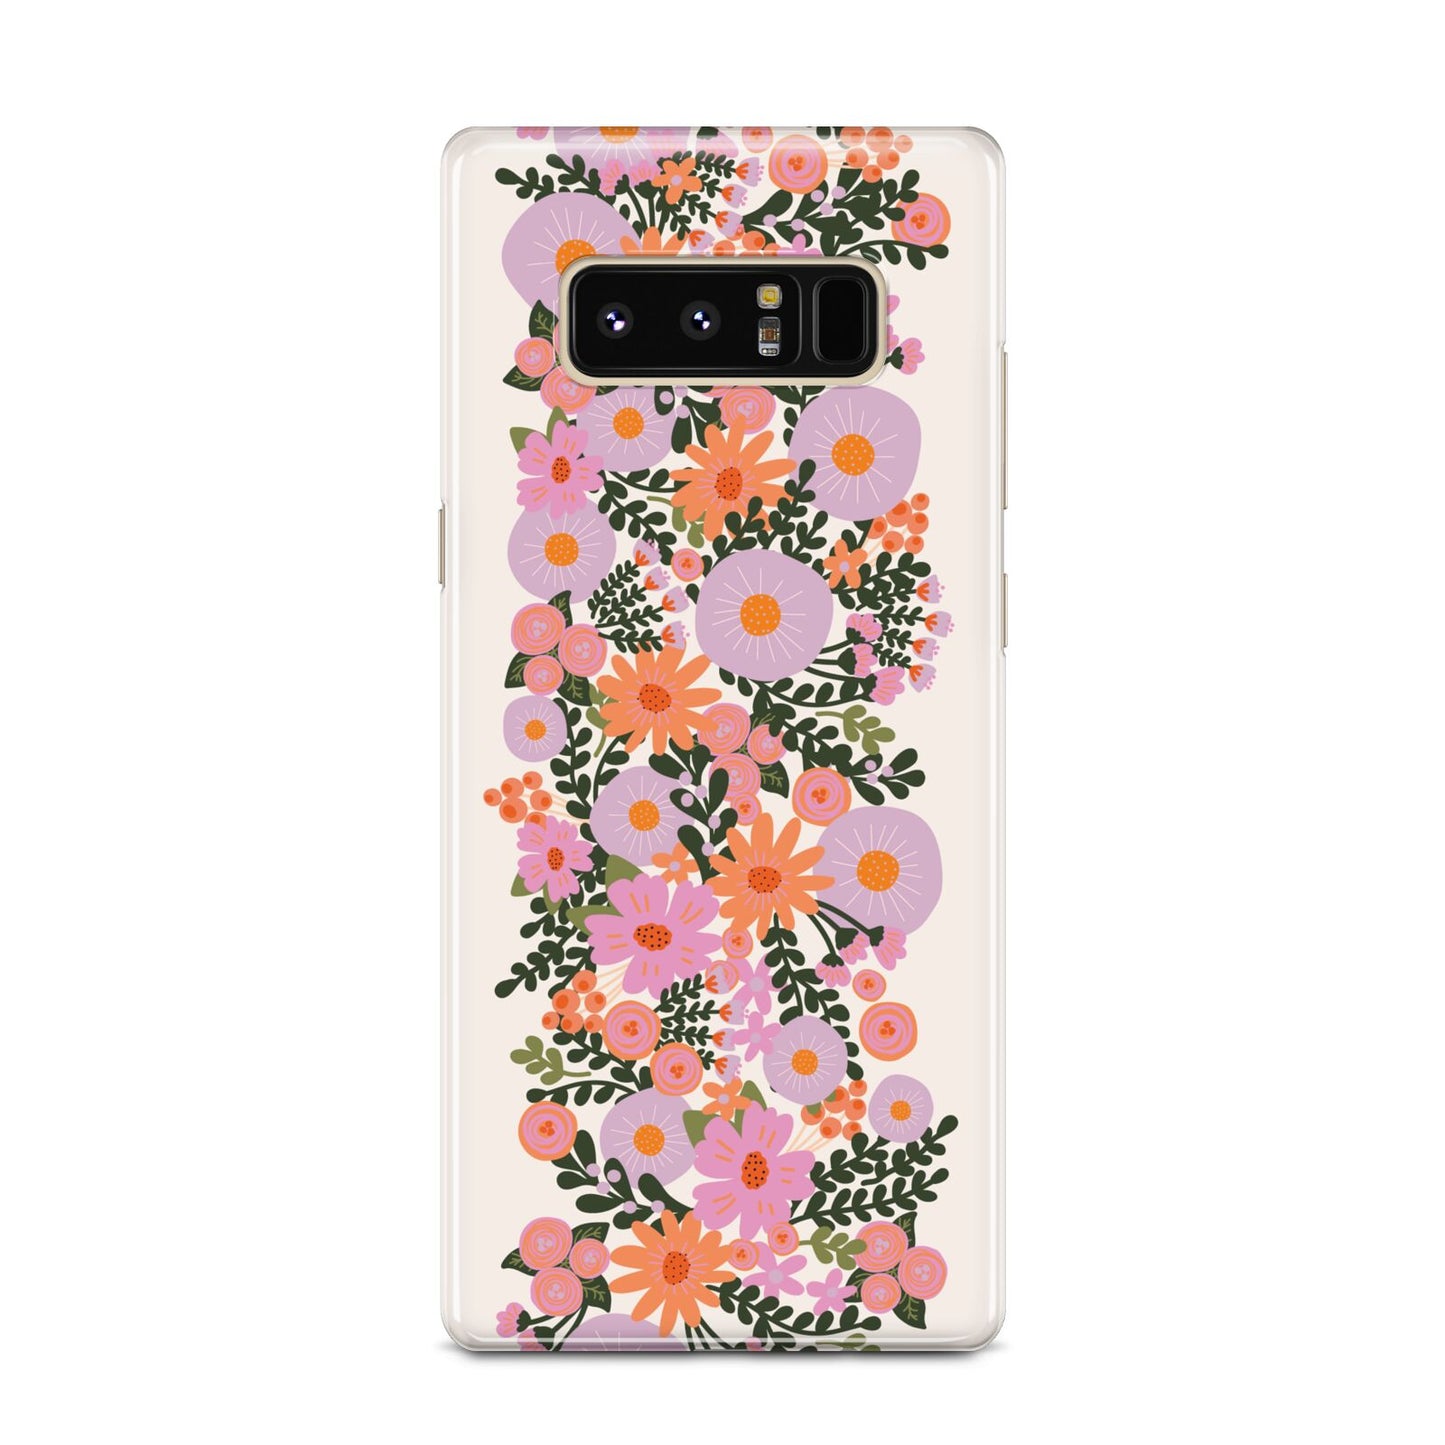 Floral Banner Pattern Samsung Galaxy Note 8 Case